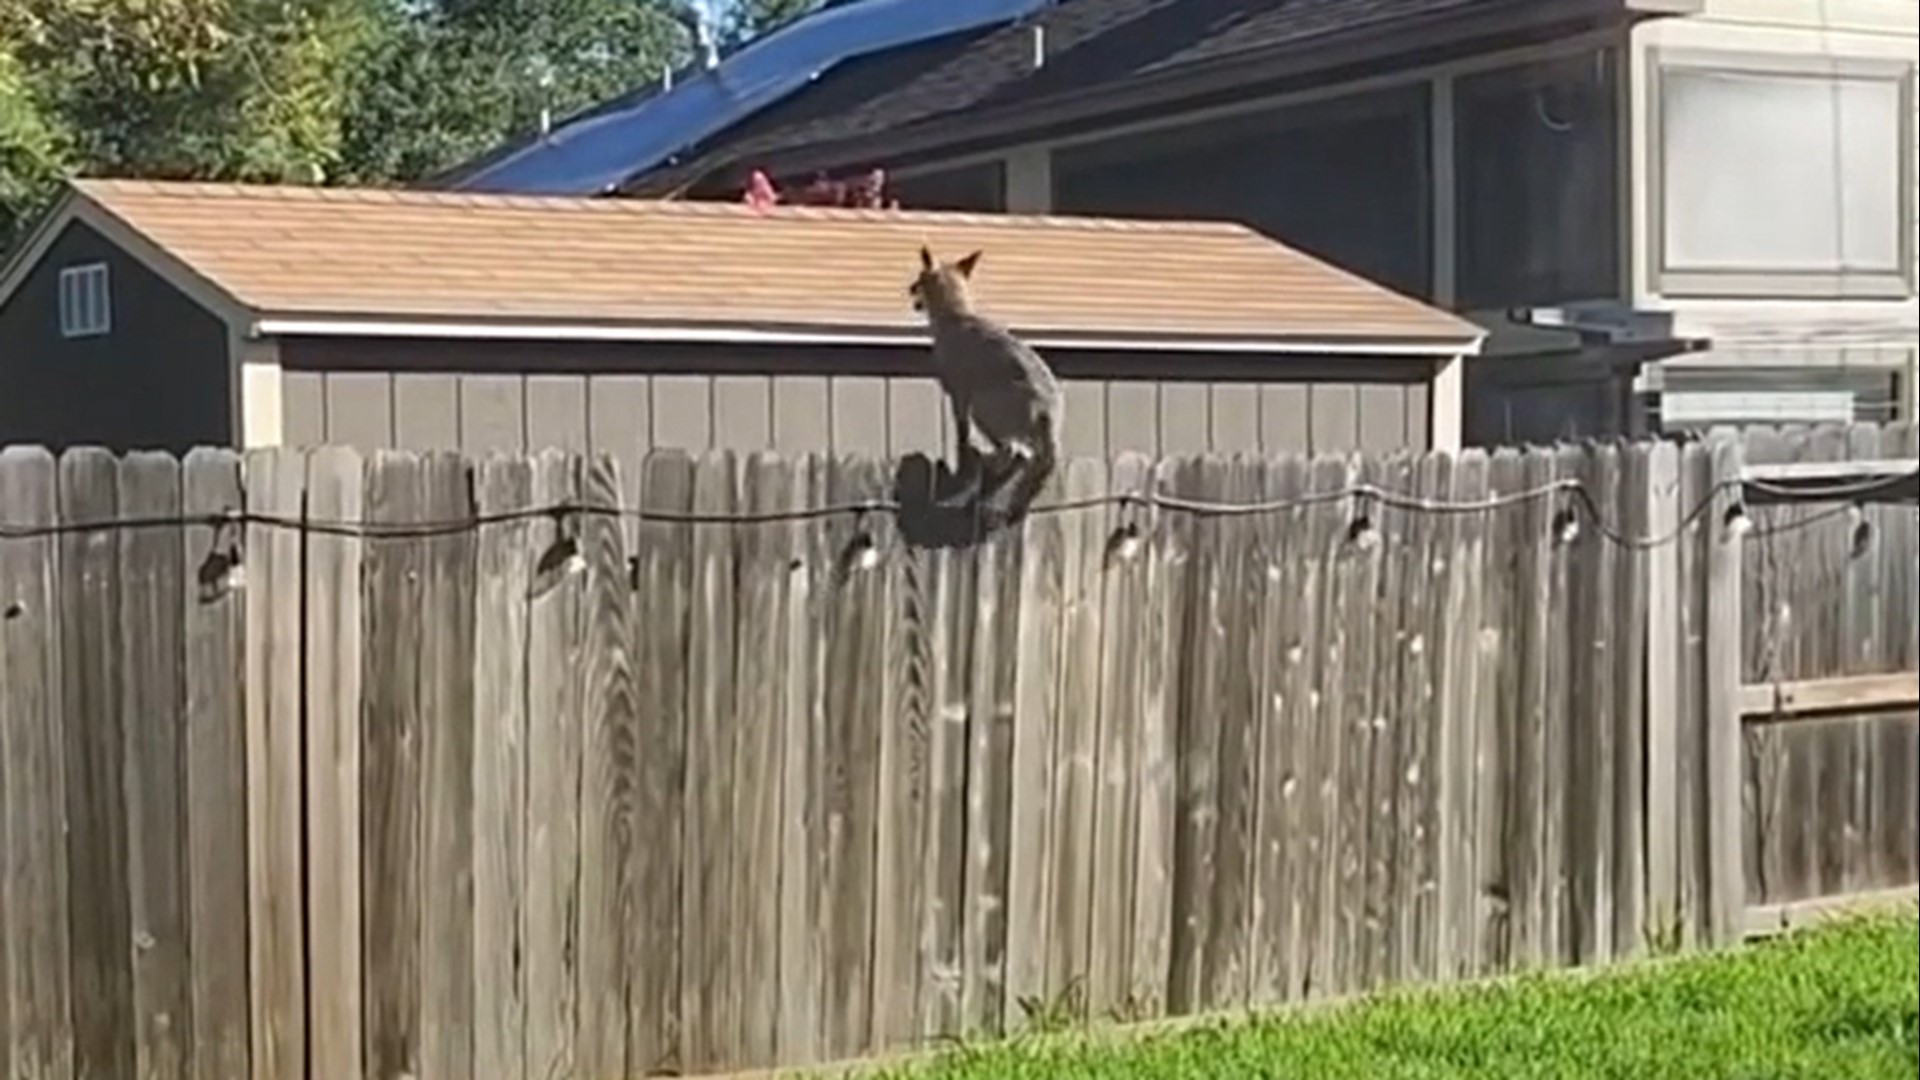 Raw video Coyote jumps fence in Pecan Grove neighborhood khou